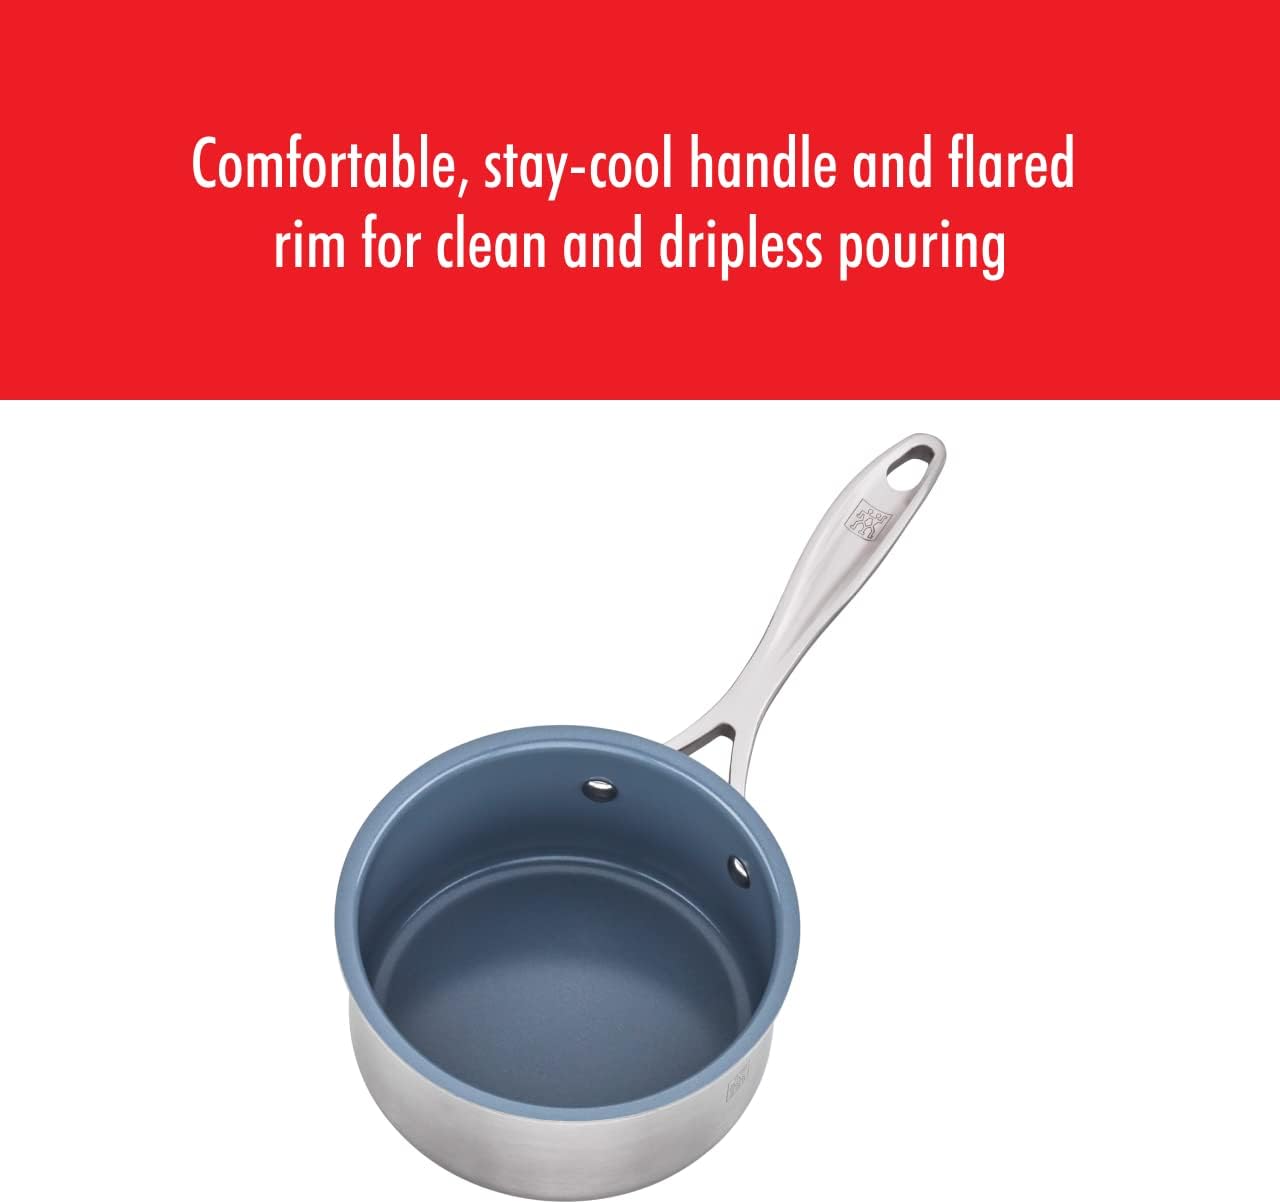 ZWILLING Spirit Ceramic Nonstick Fry Pan, 8-inch, Stainless Steel